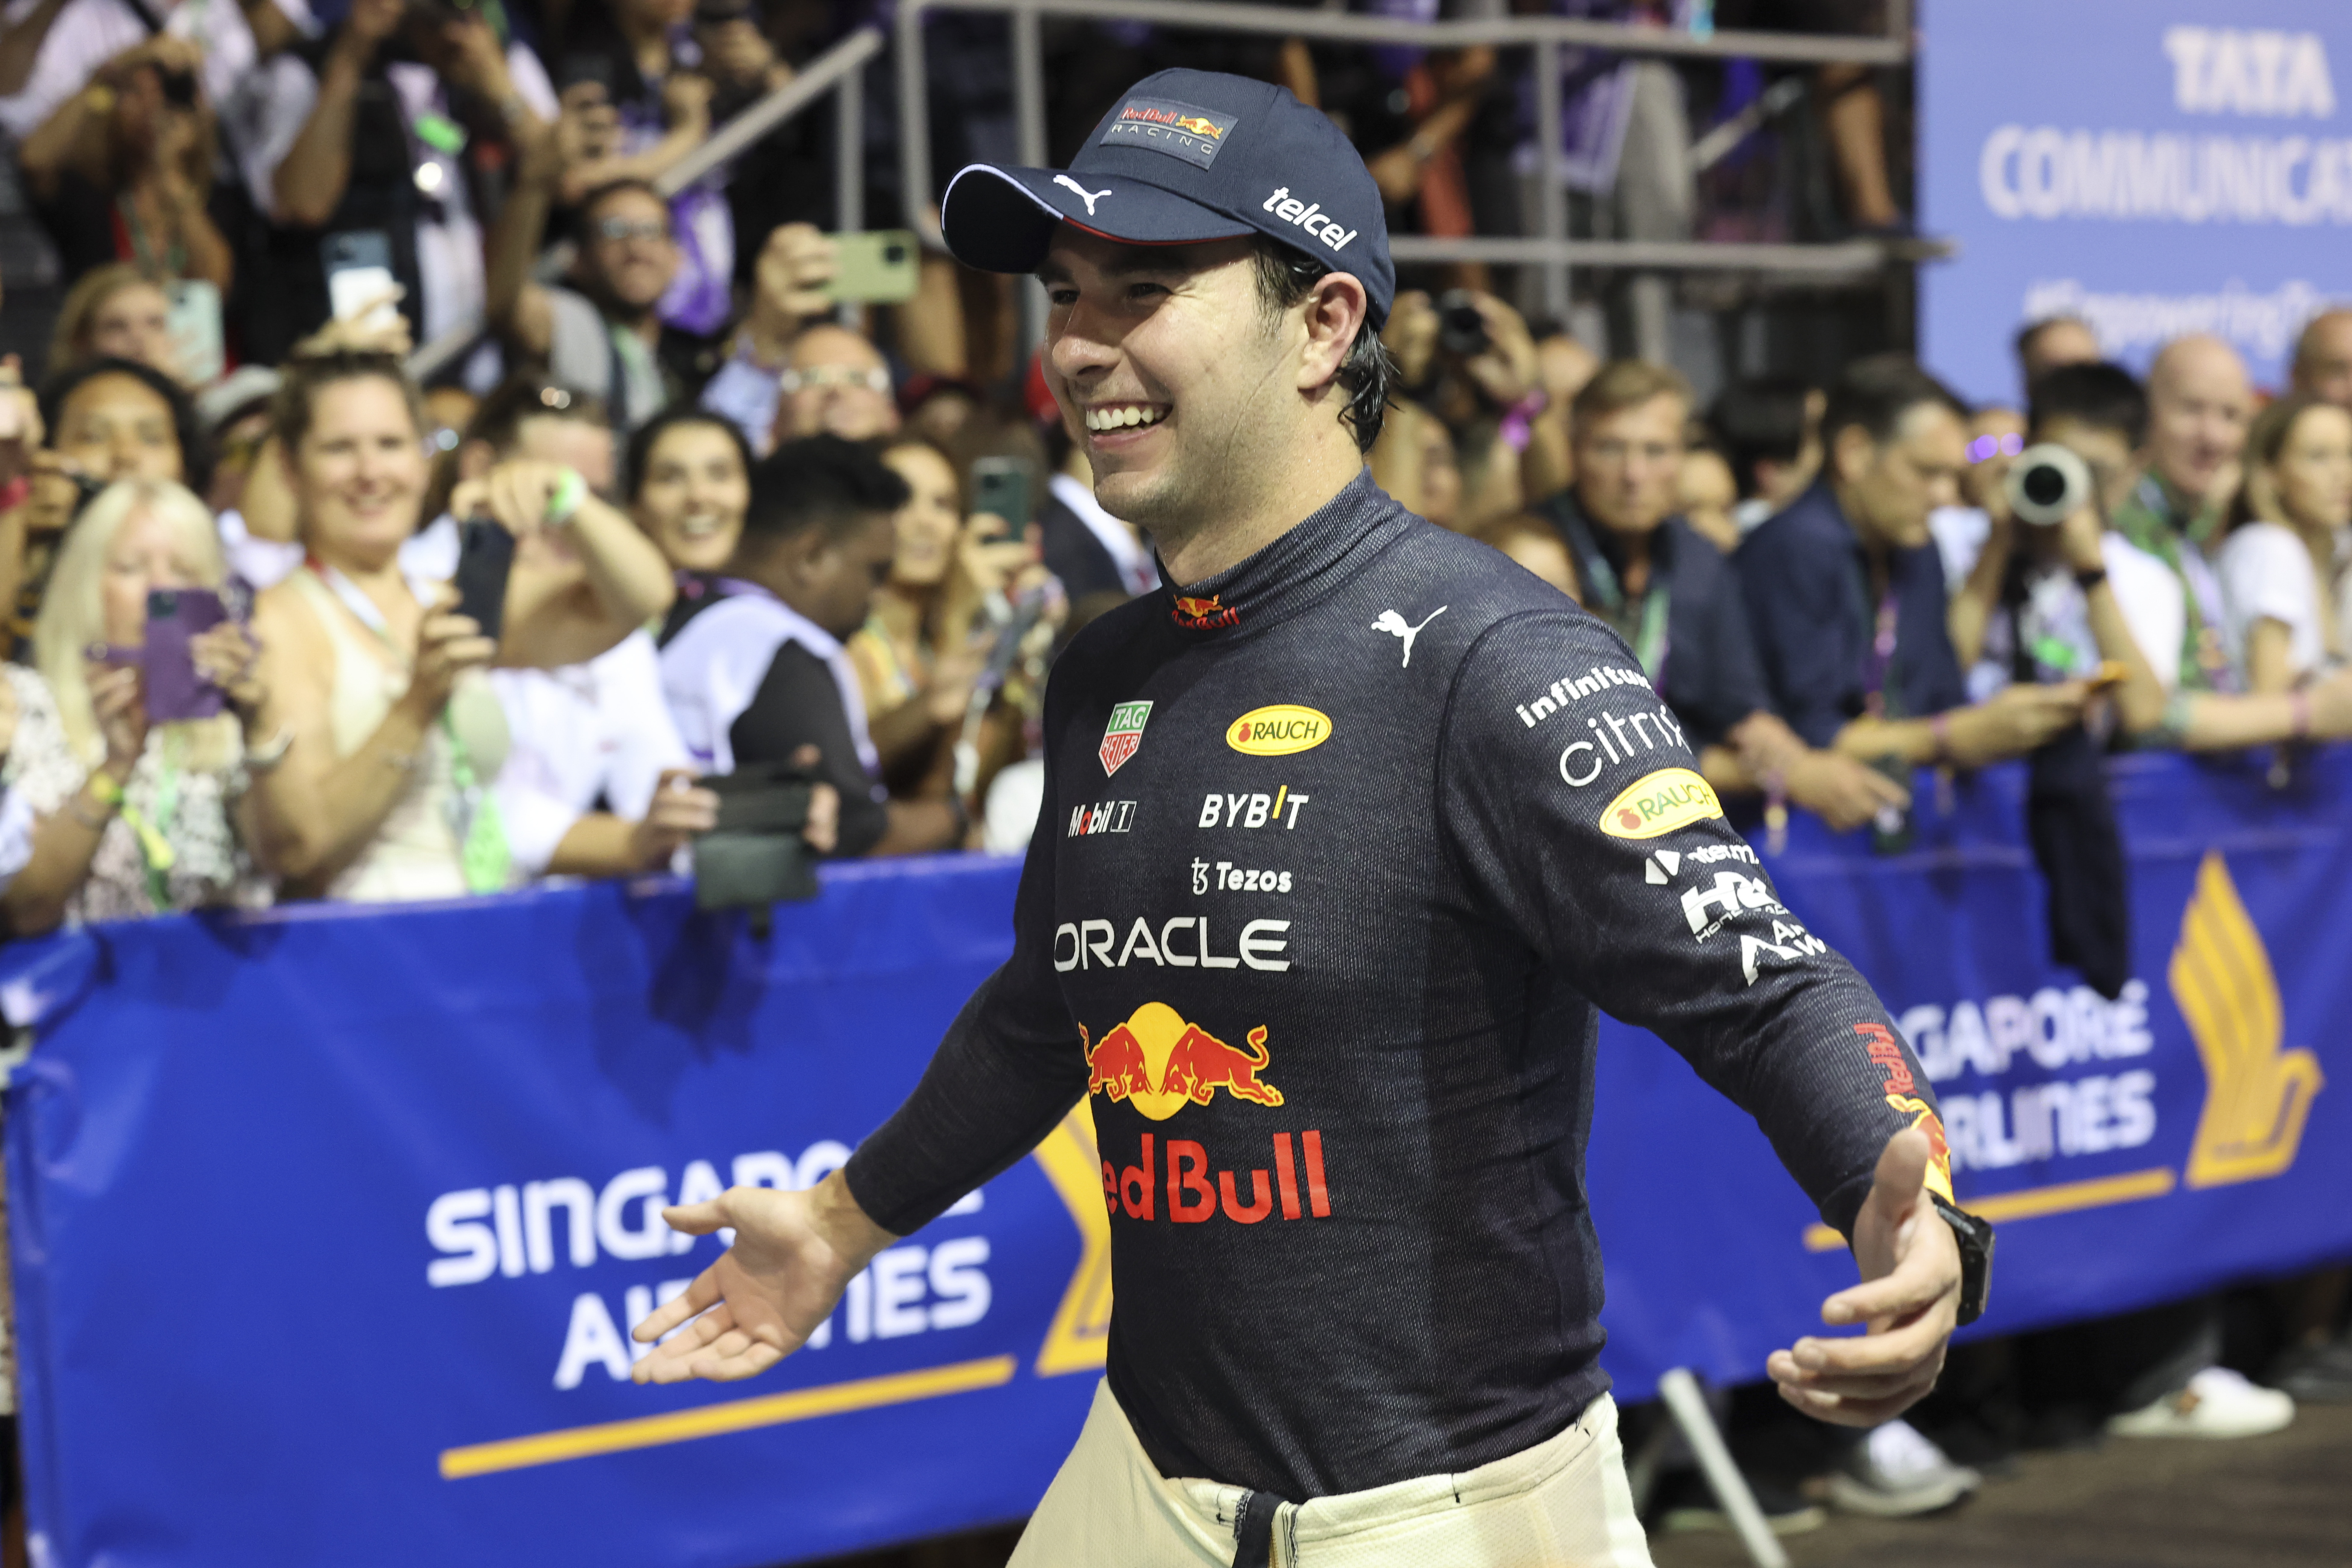 Singapur Grand Prix'sinde zafer Sergio Perez'in